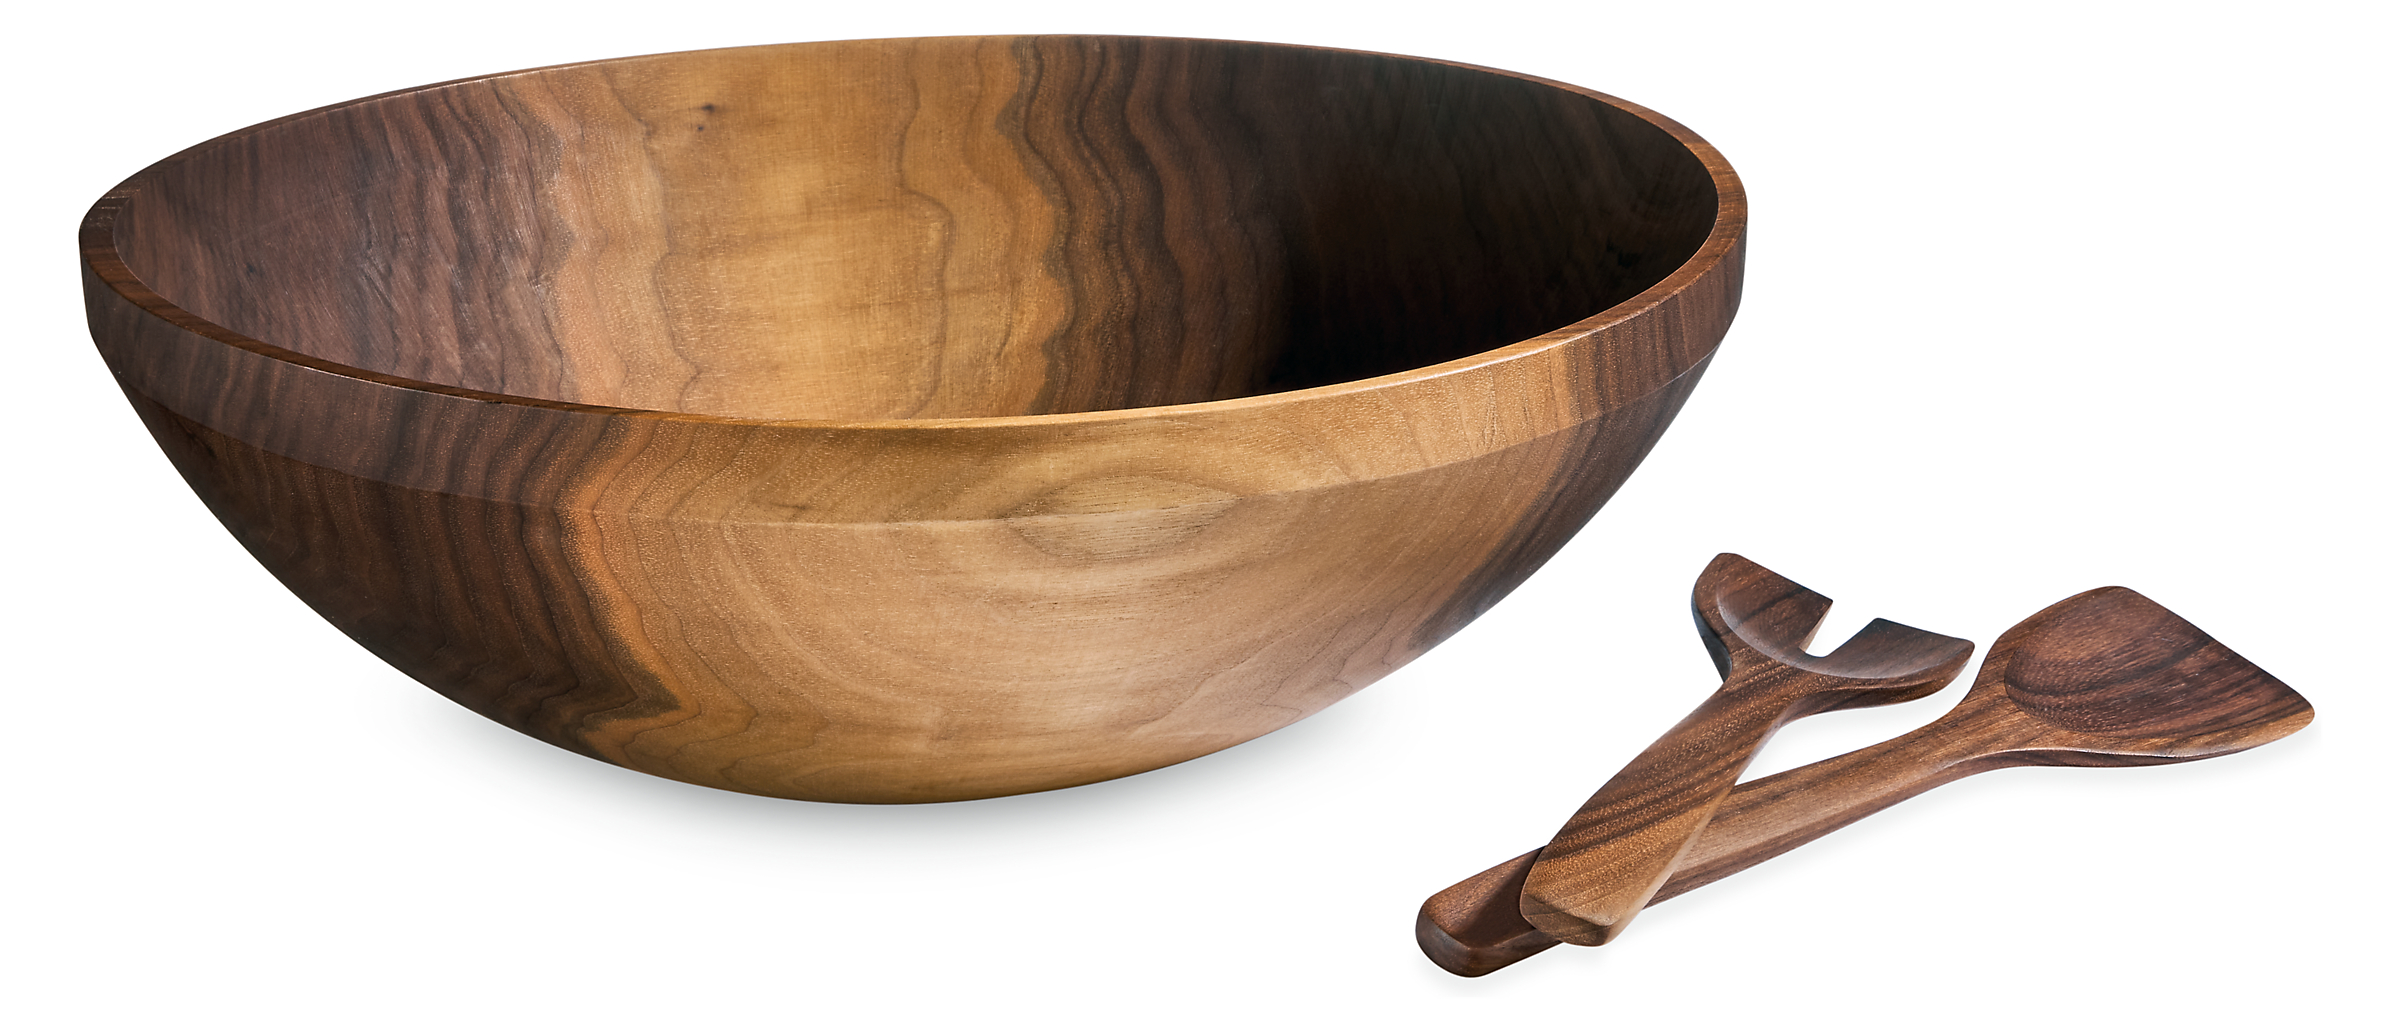 Elliott Salad Set - 17 diam 6h Bowl with Moore Wooden Spoon/Fork